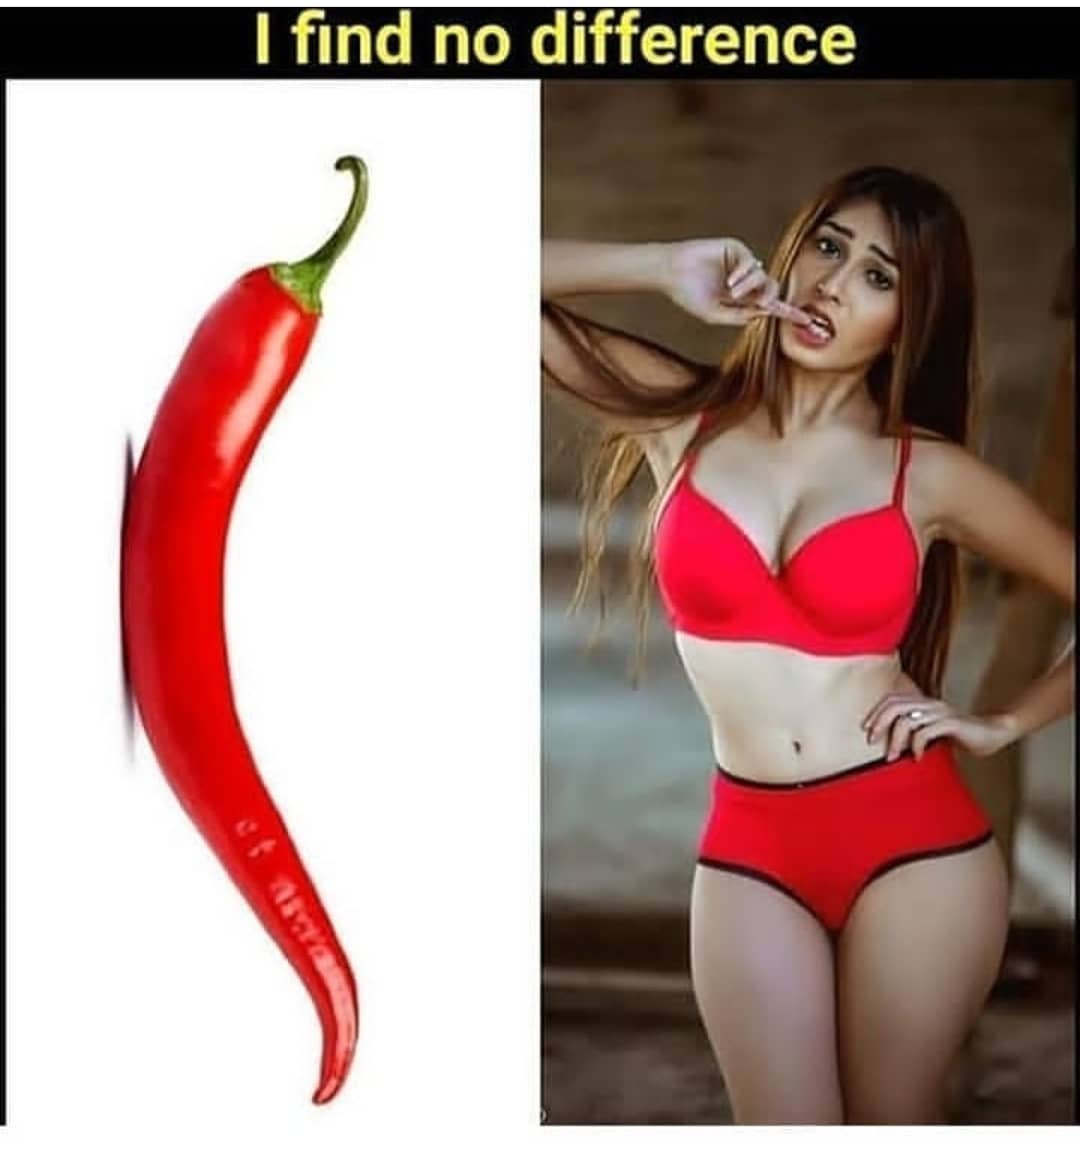 ruma sharma in red bikini - I find no difference